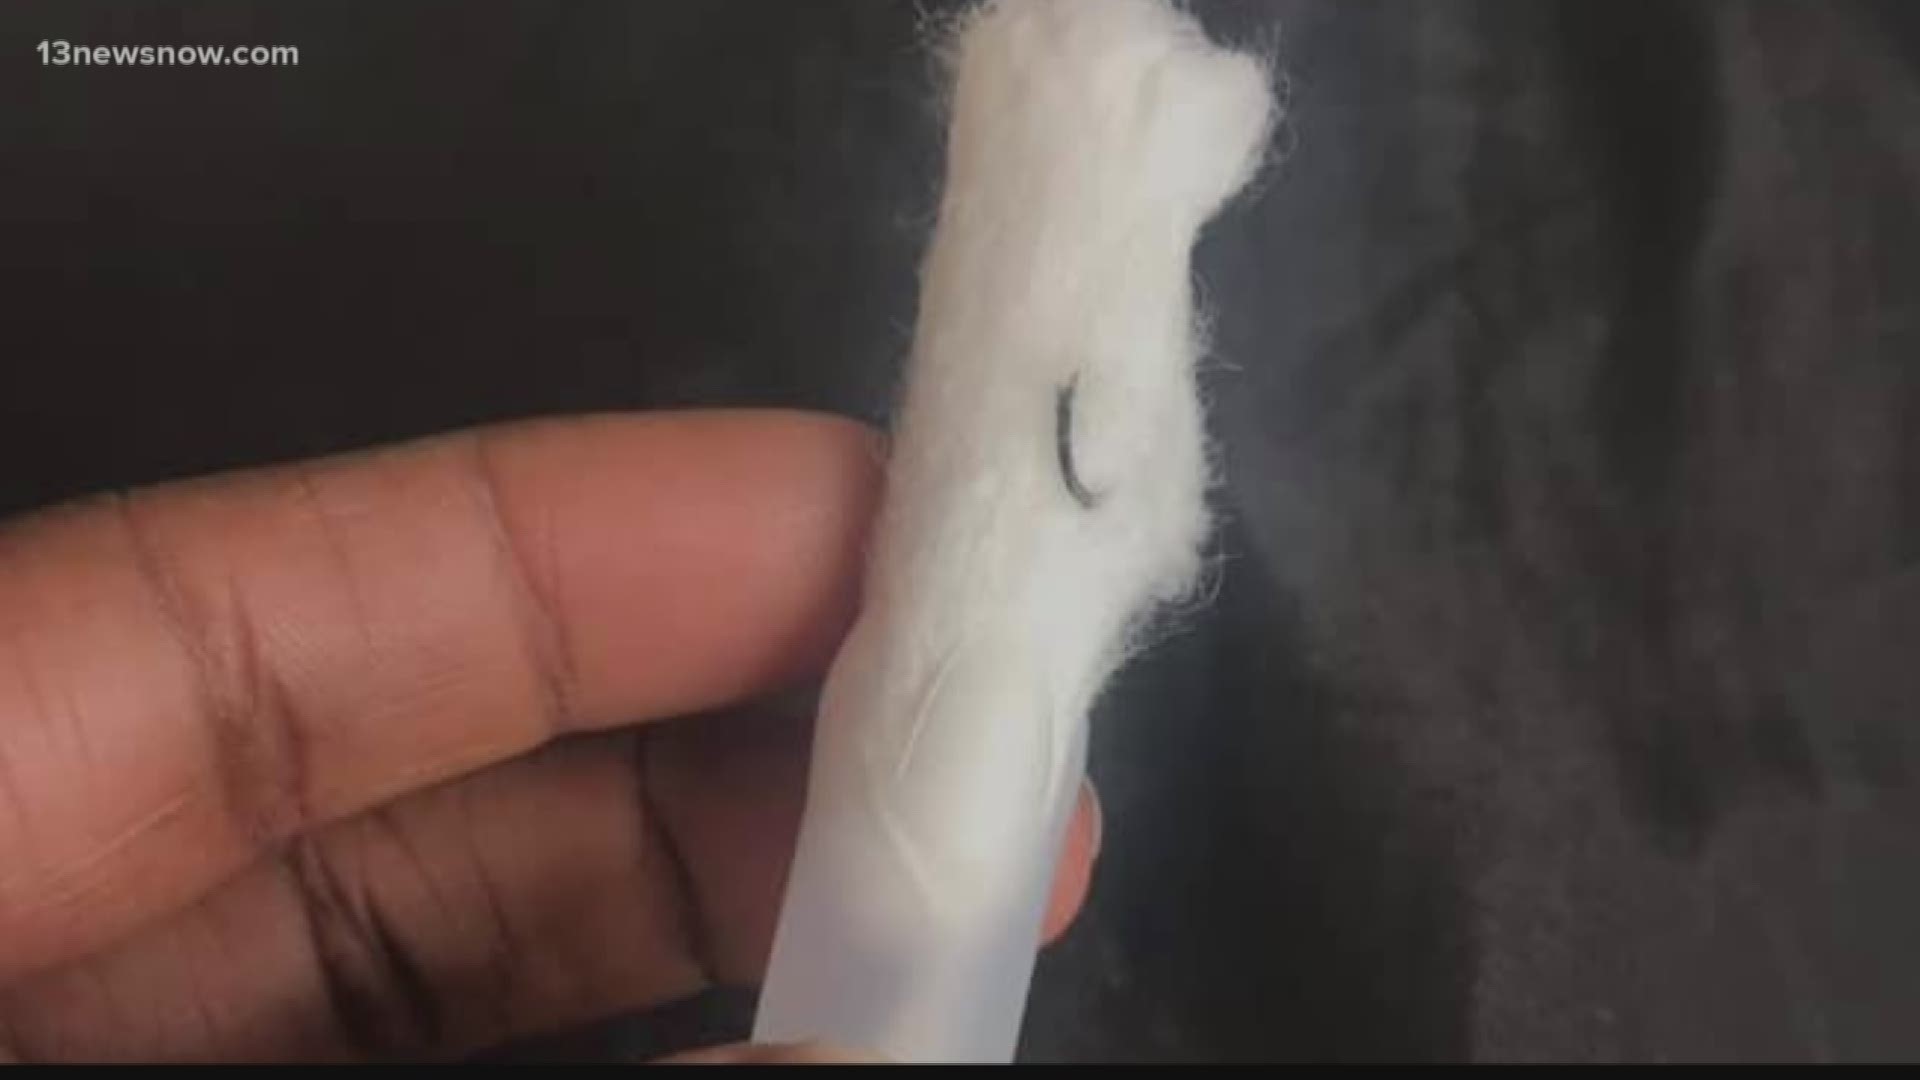 A Virginia Beach woman found a hook inside her tampon.